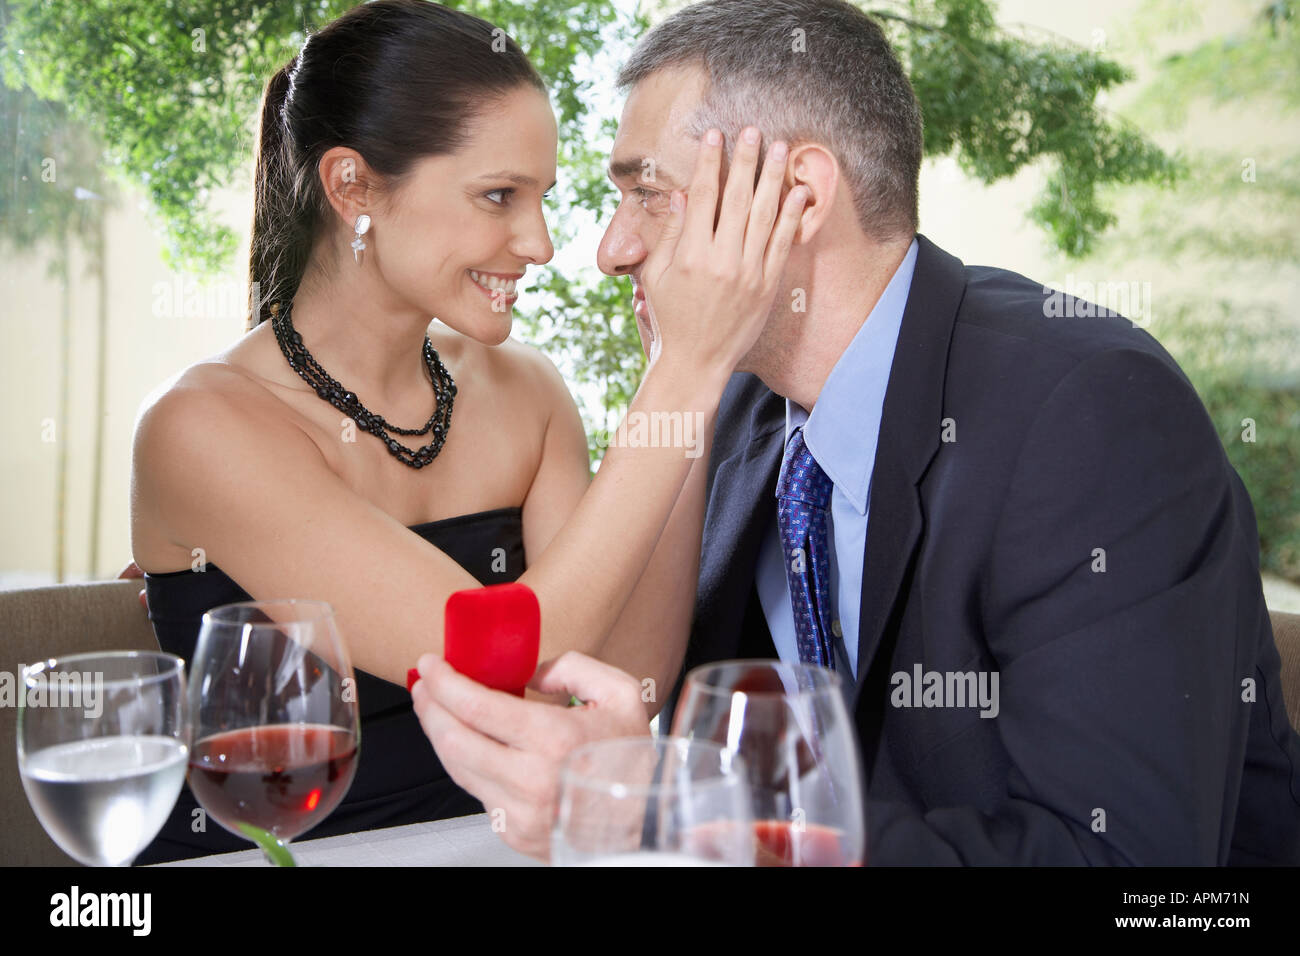 Woman touching man's face, man holding gift Stock Photo